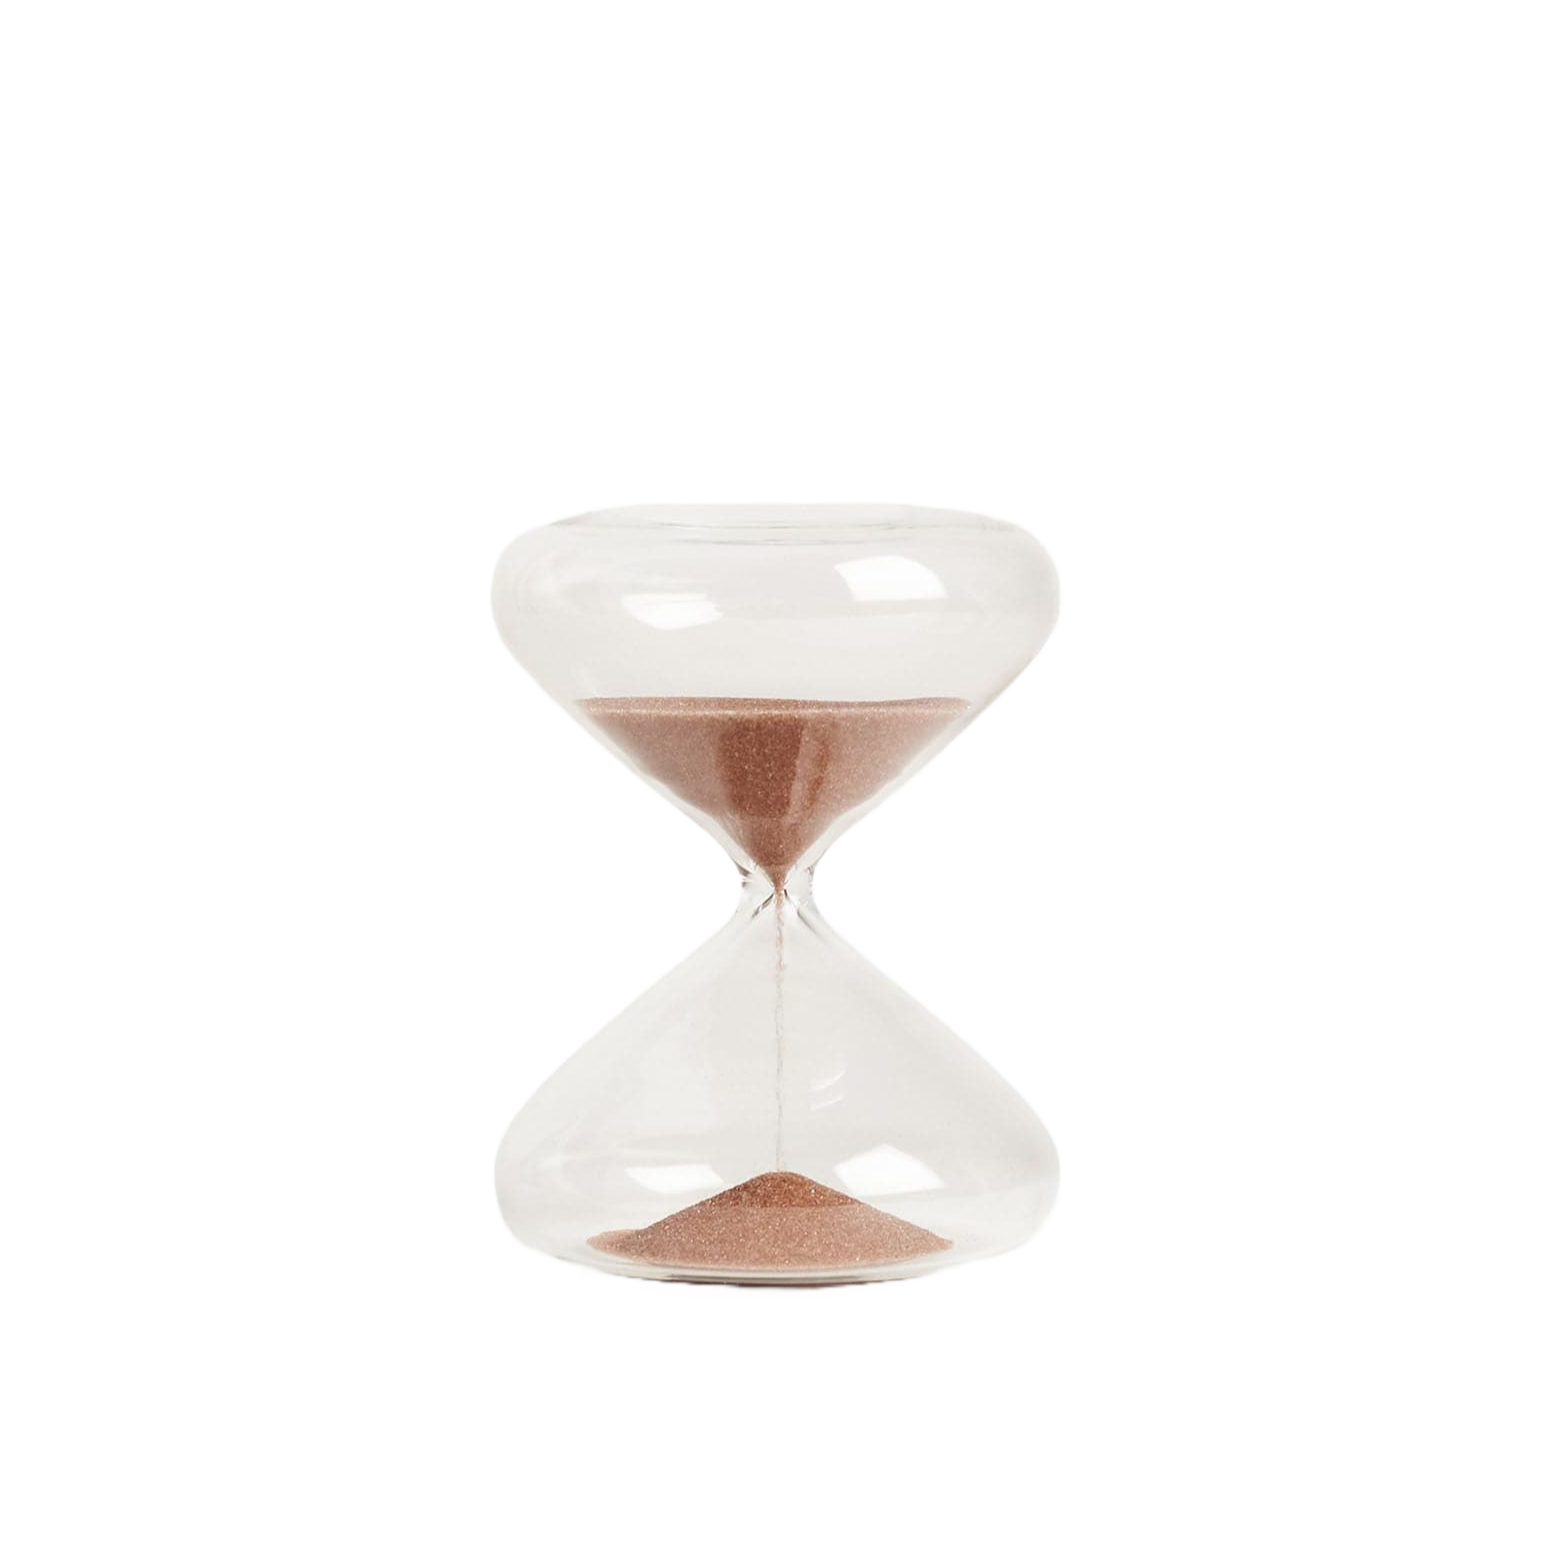 Mindful Focus Hourglass